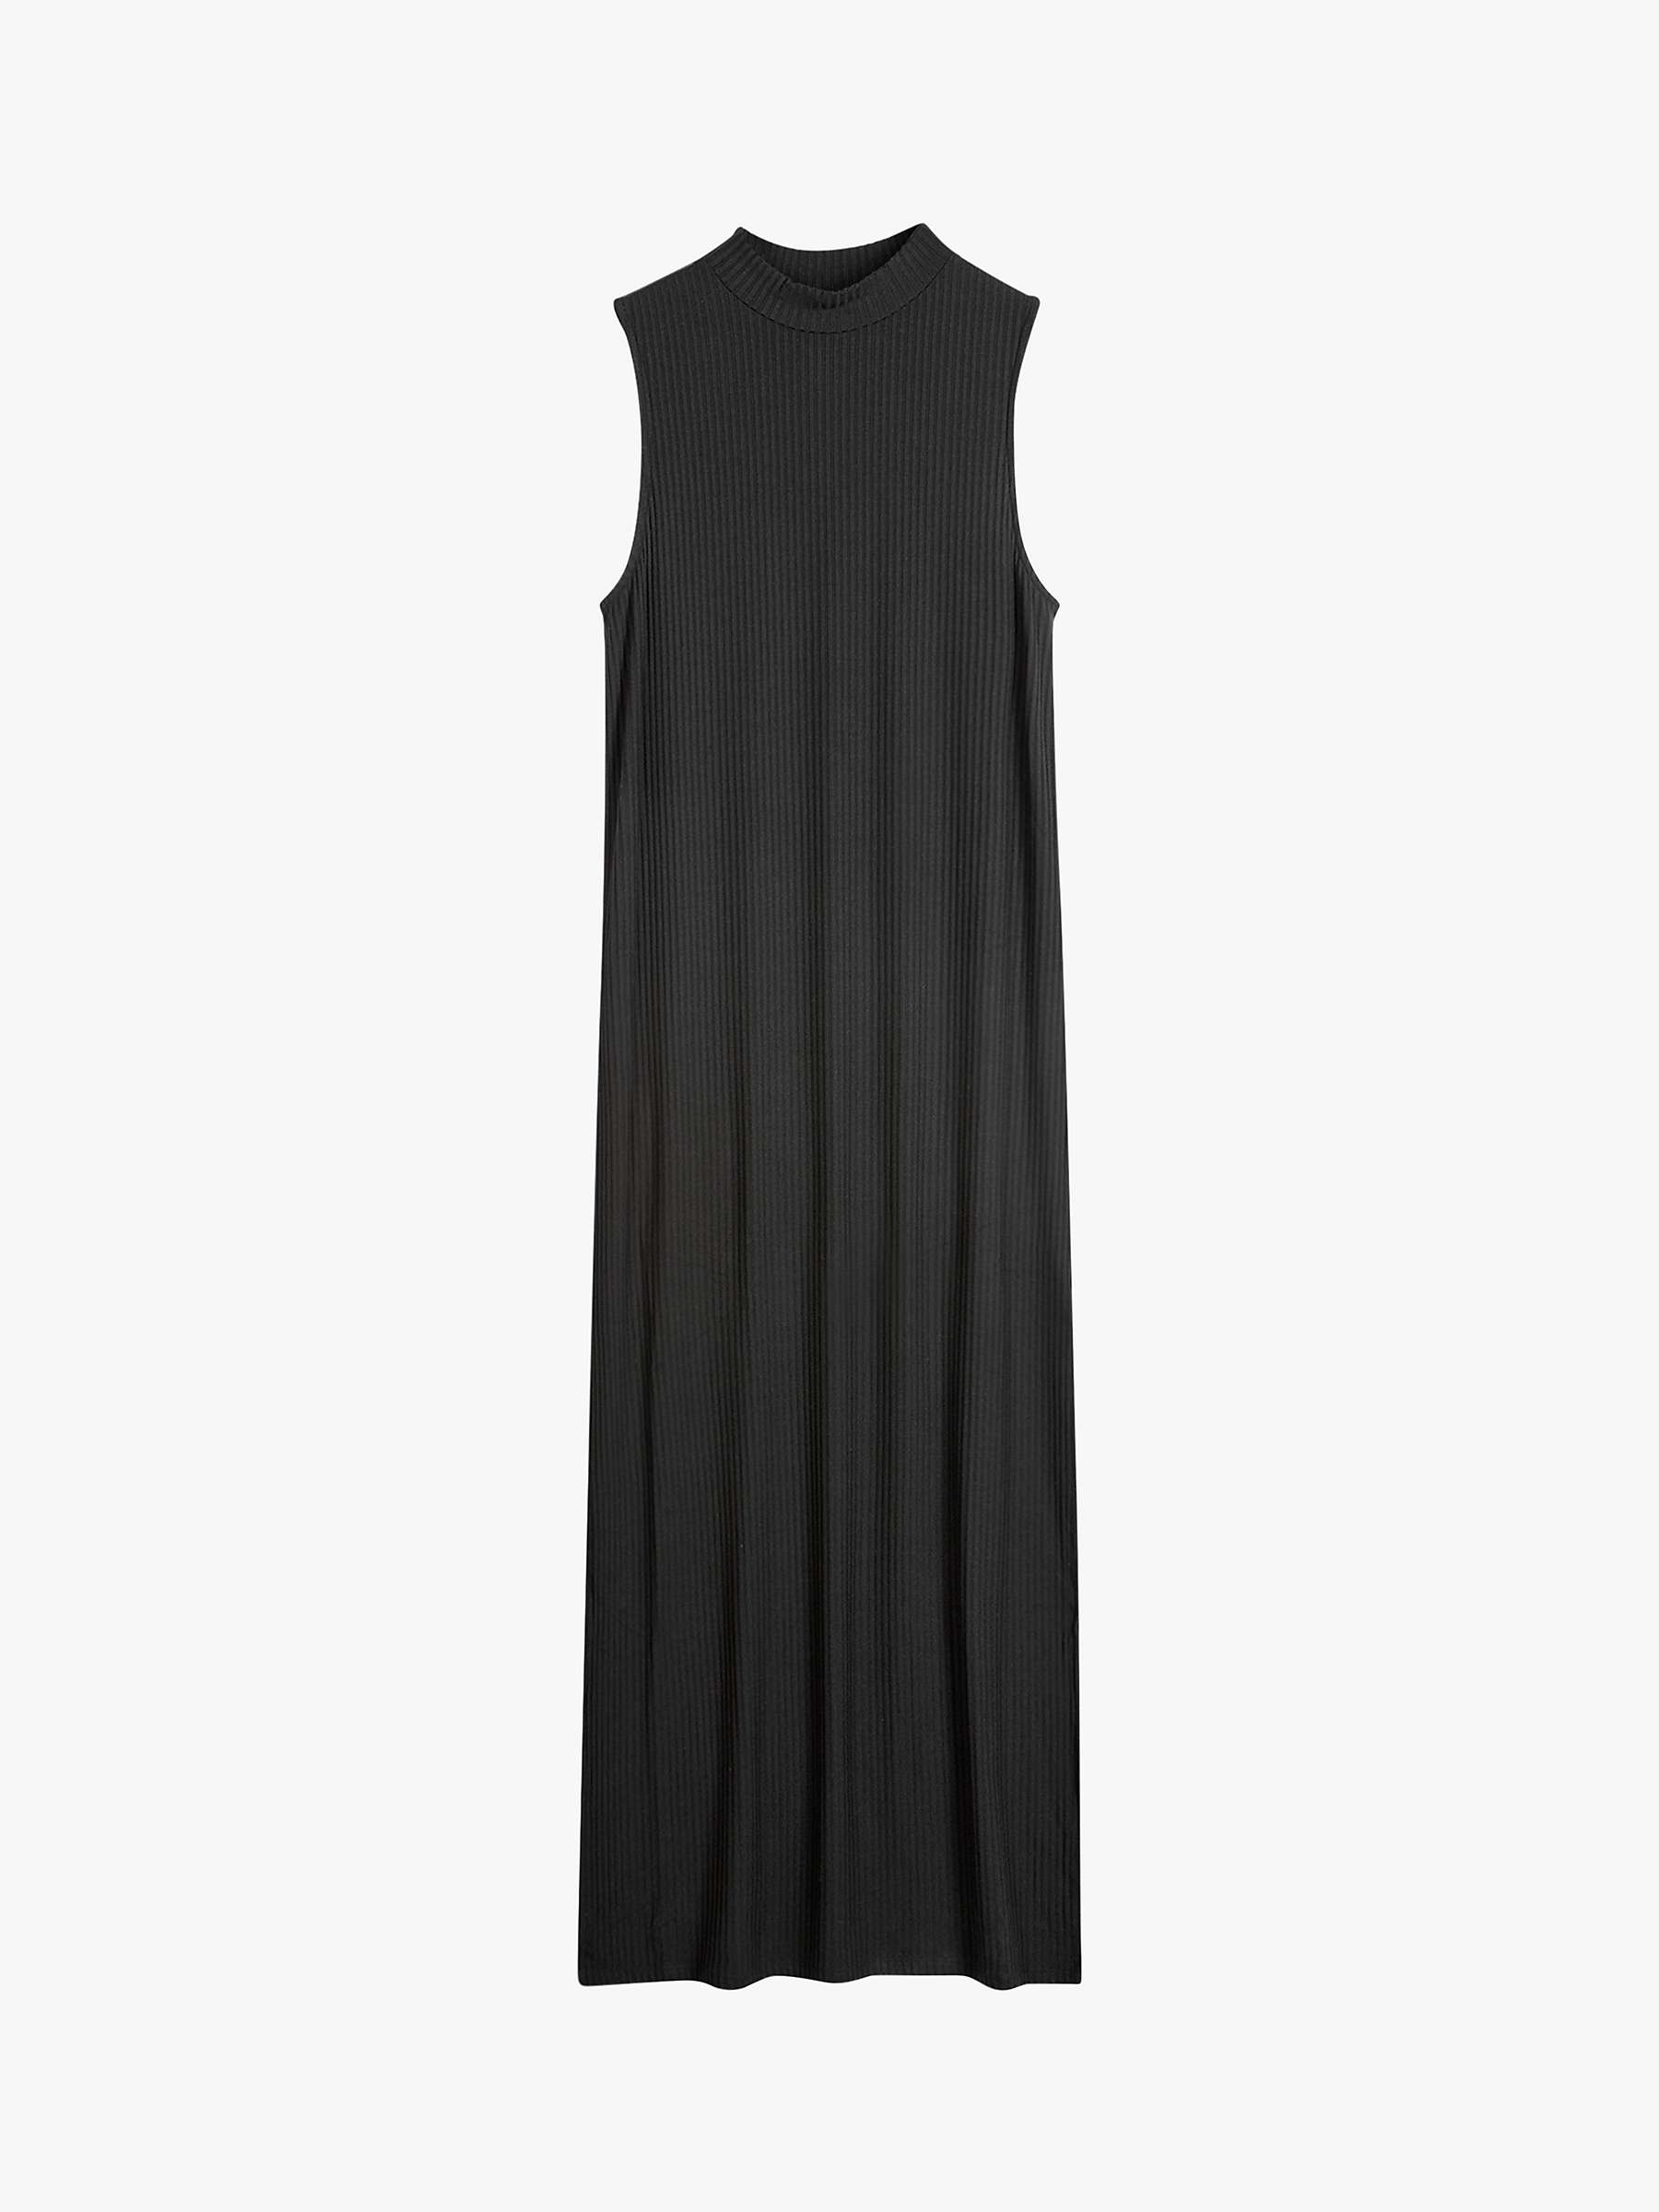 hush Alexis Ribbed Jersey Midi Dress, Black at John Lewis & Partners